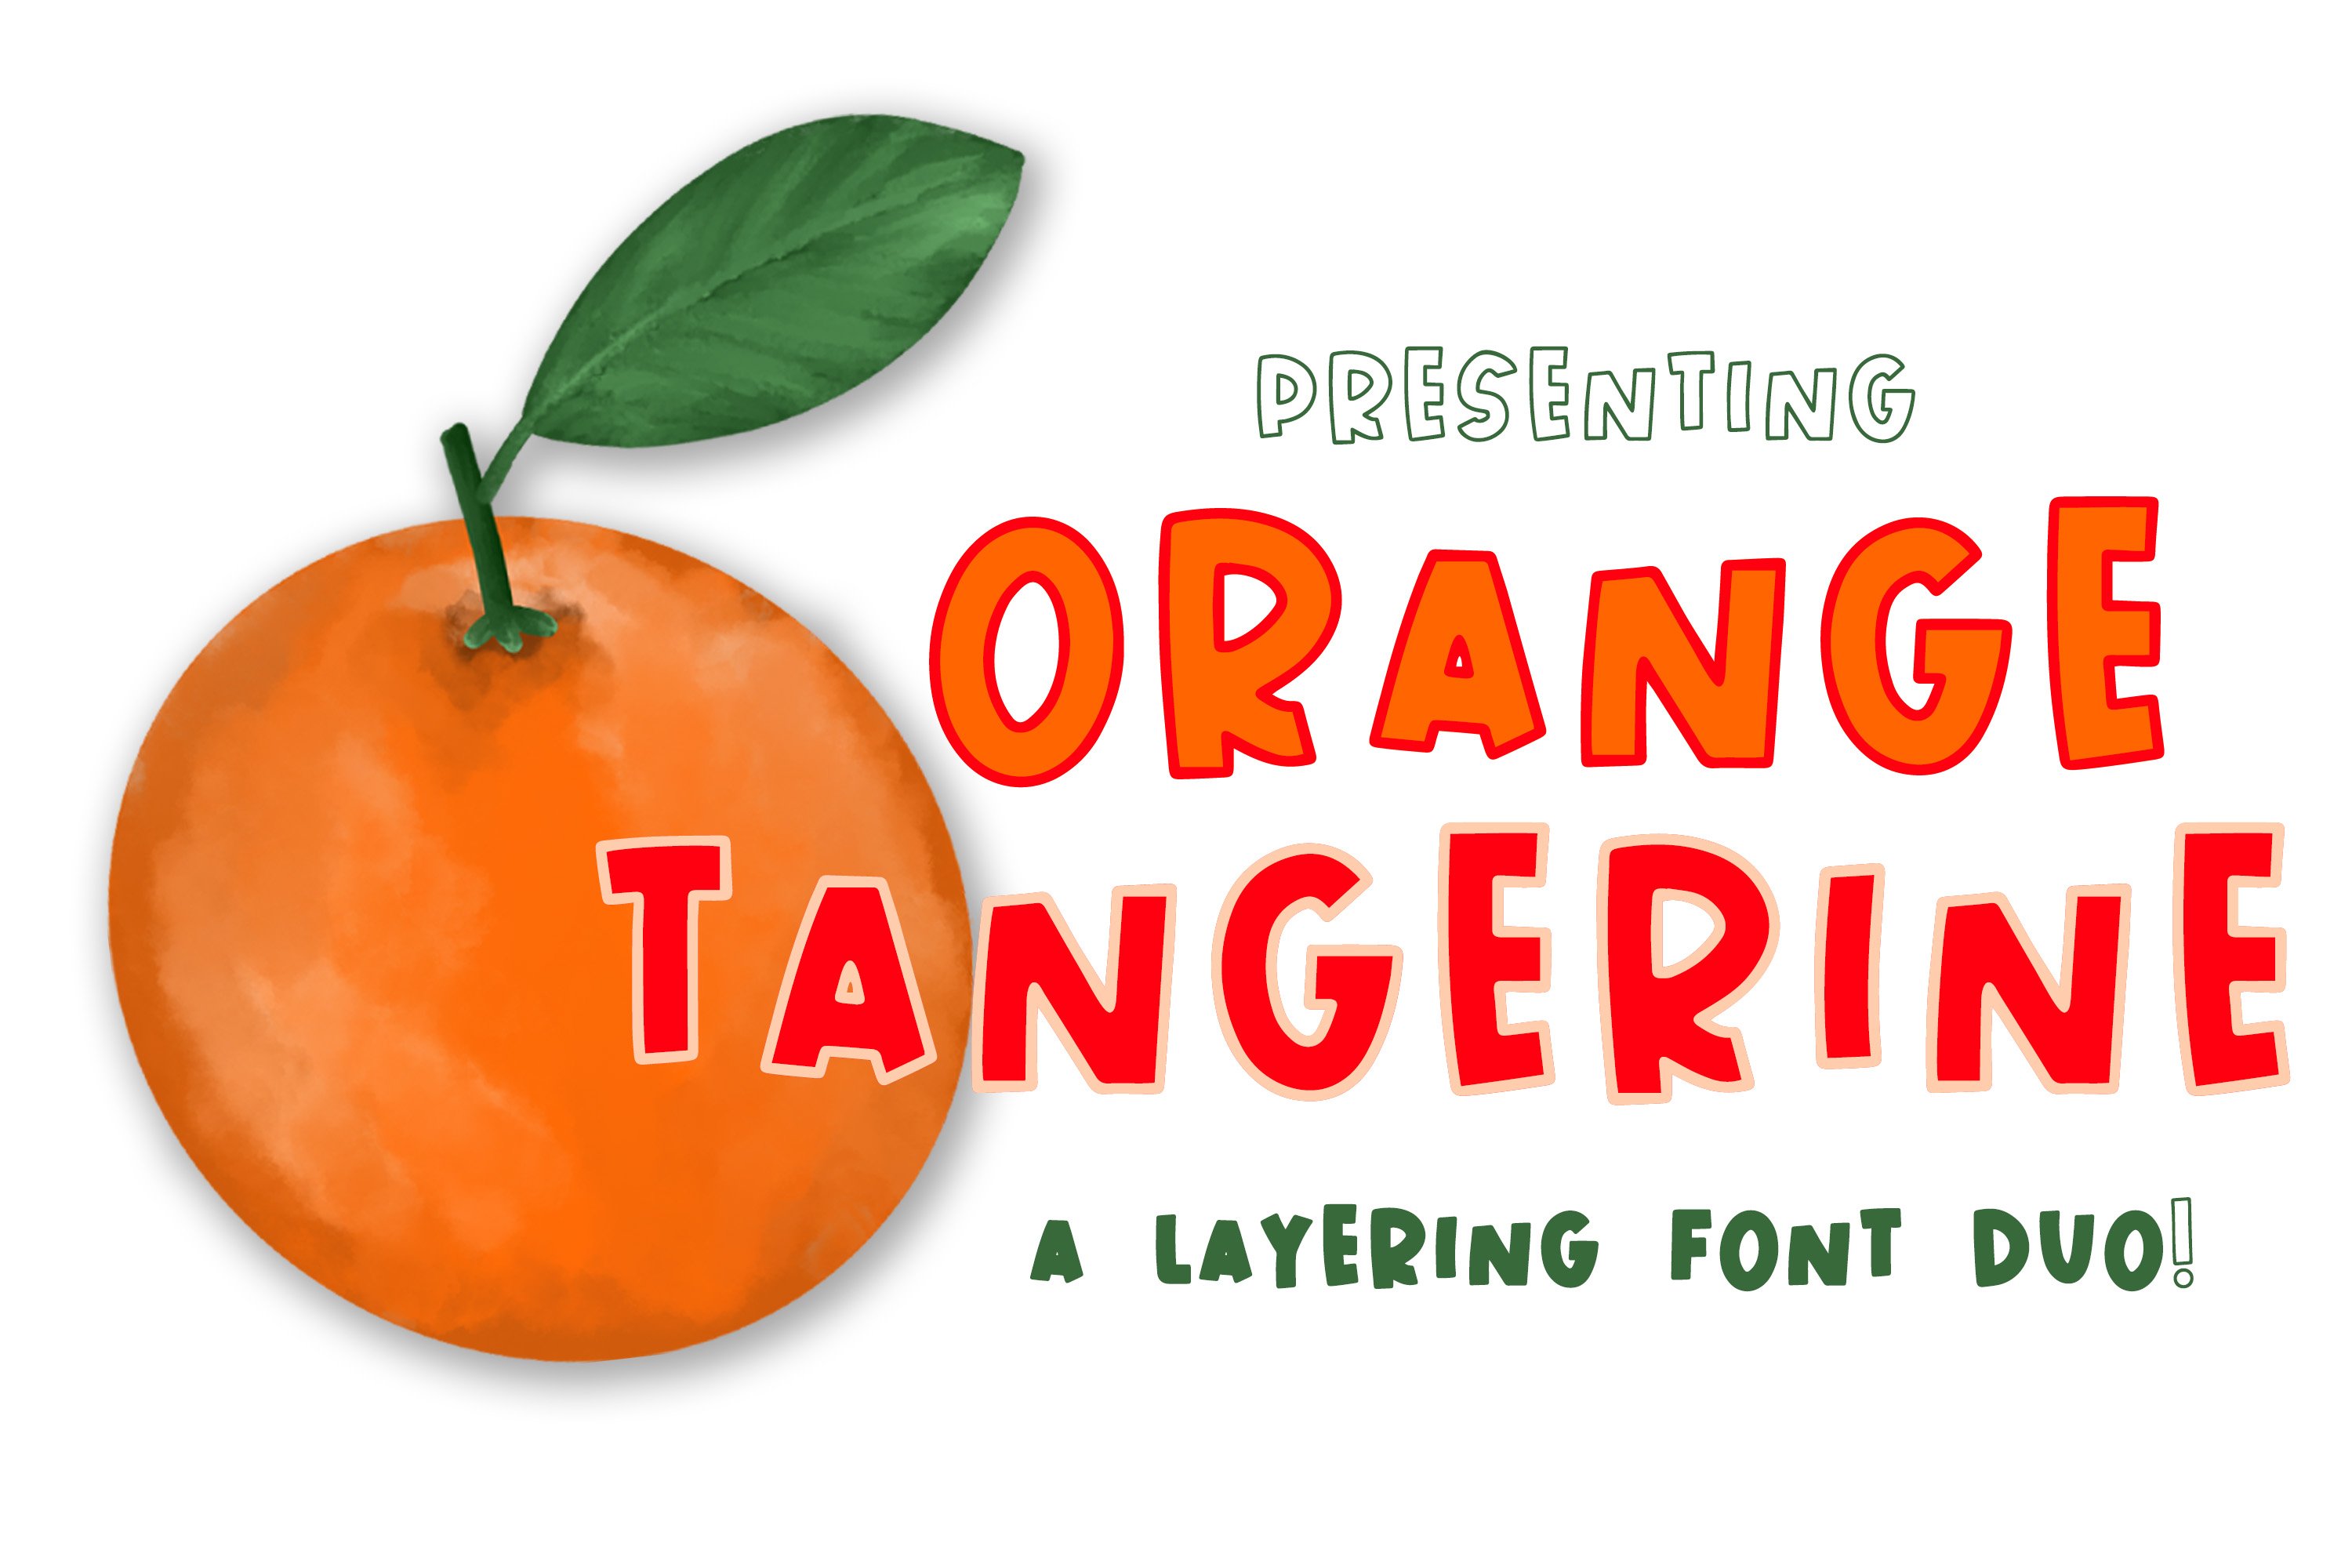 Orange Tangerine cover image.